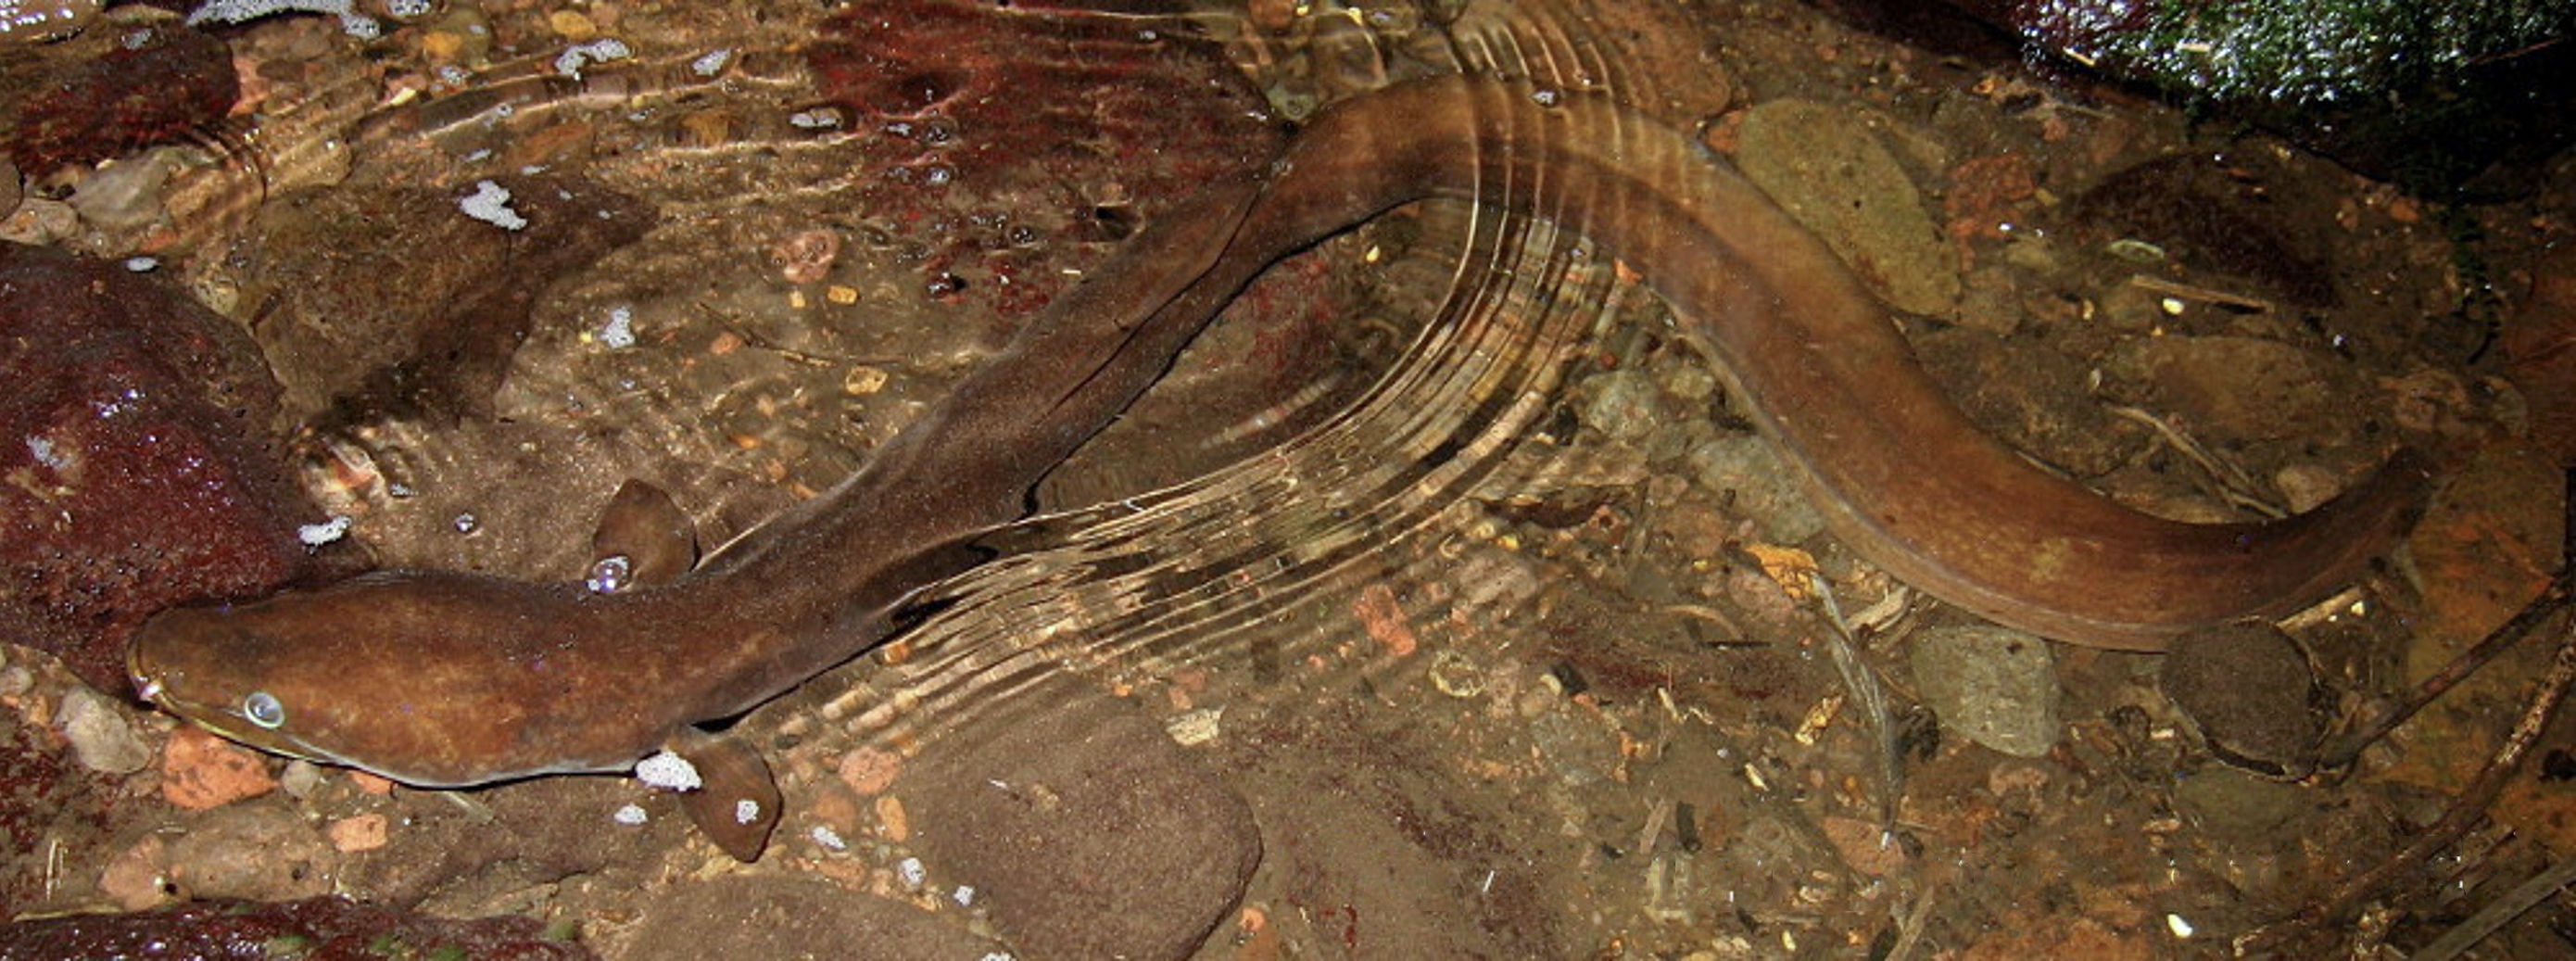 Polynesian long-finned eel, Tahiti, French Polynesia. Photo by Ila France Porcher.